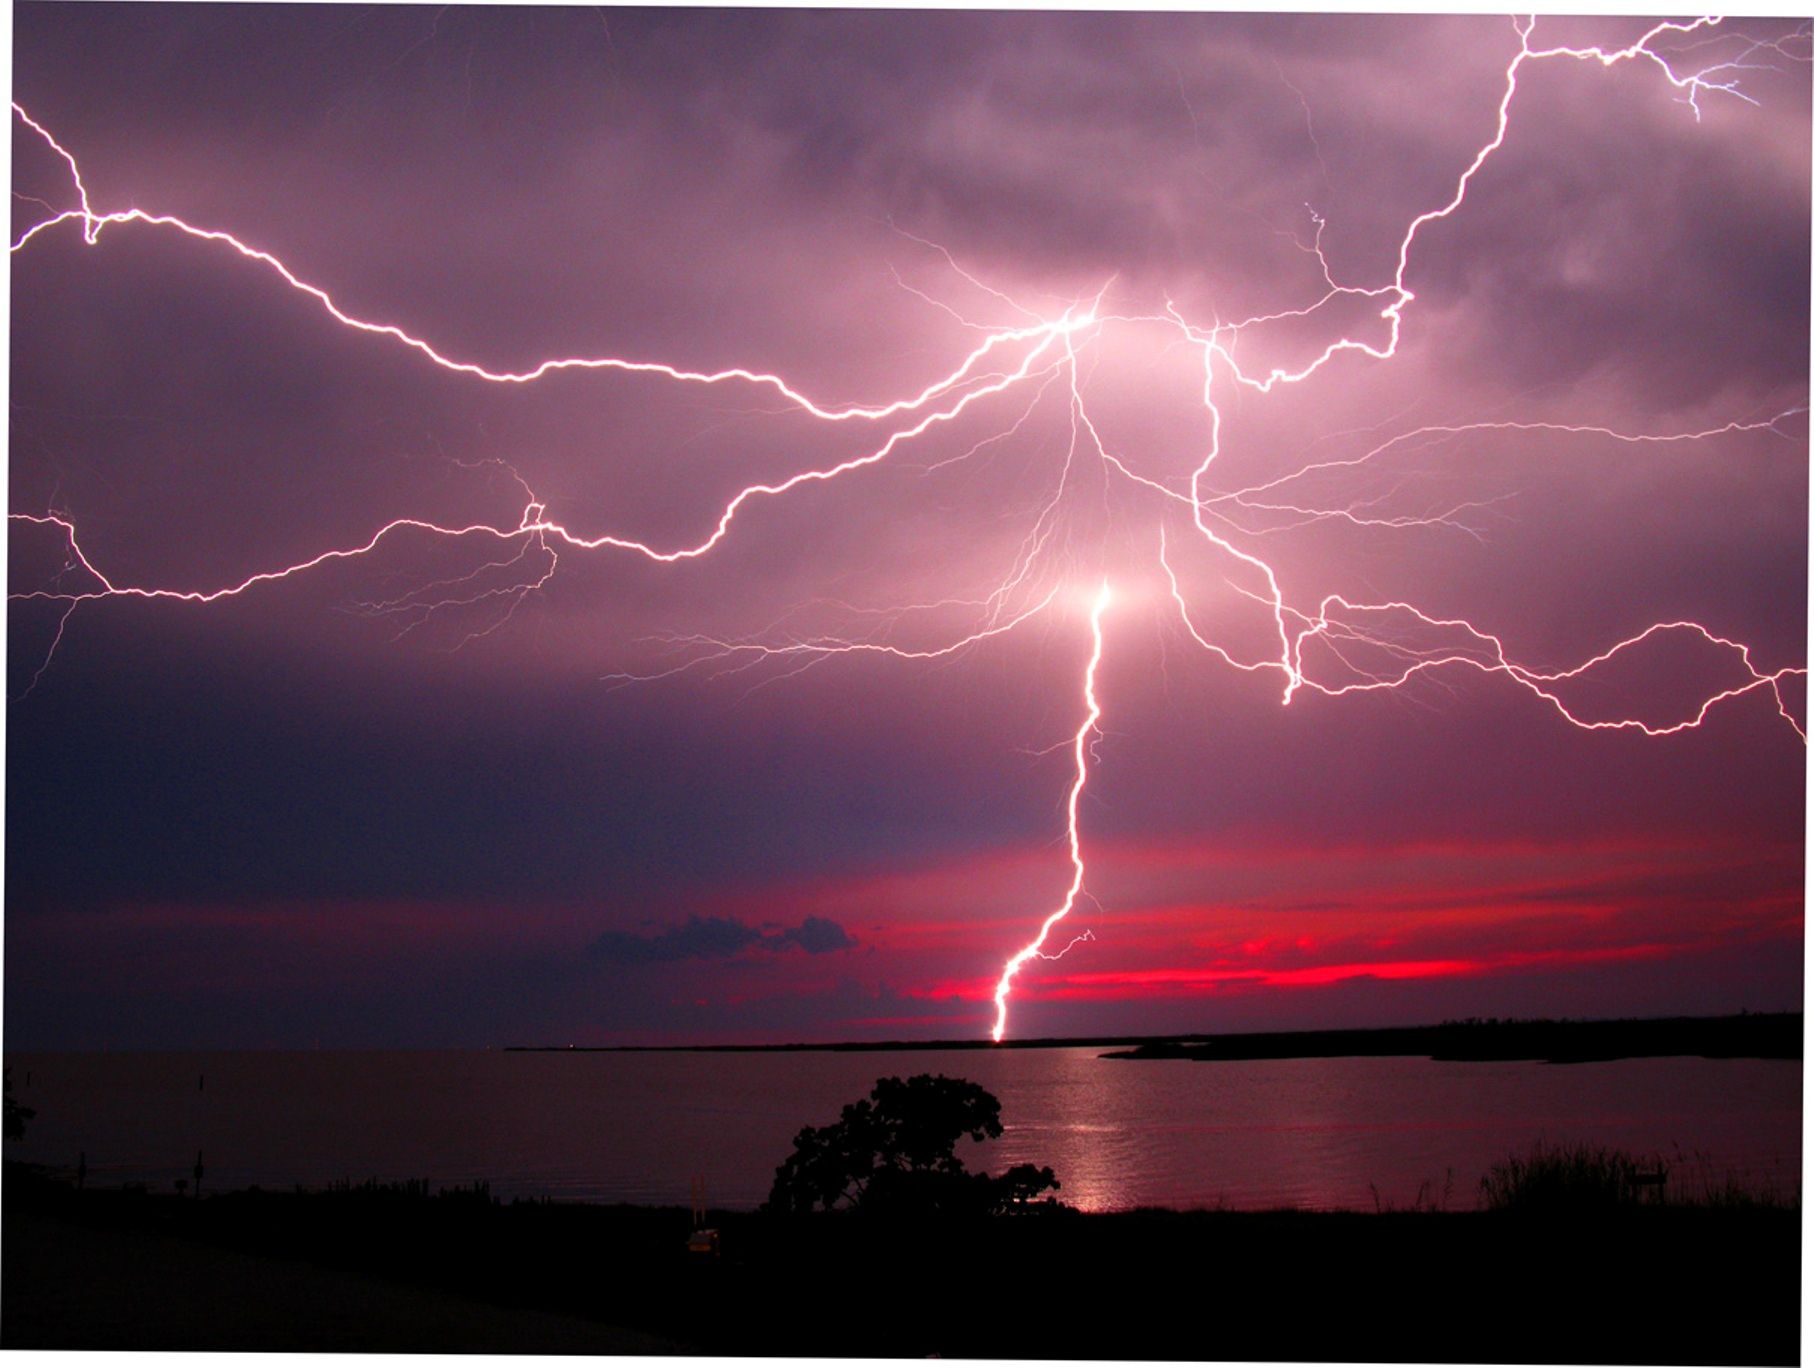 Pink Lightning Storm